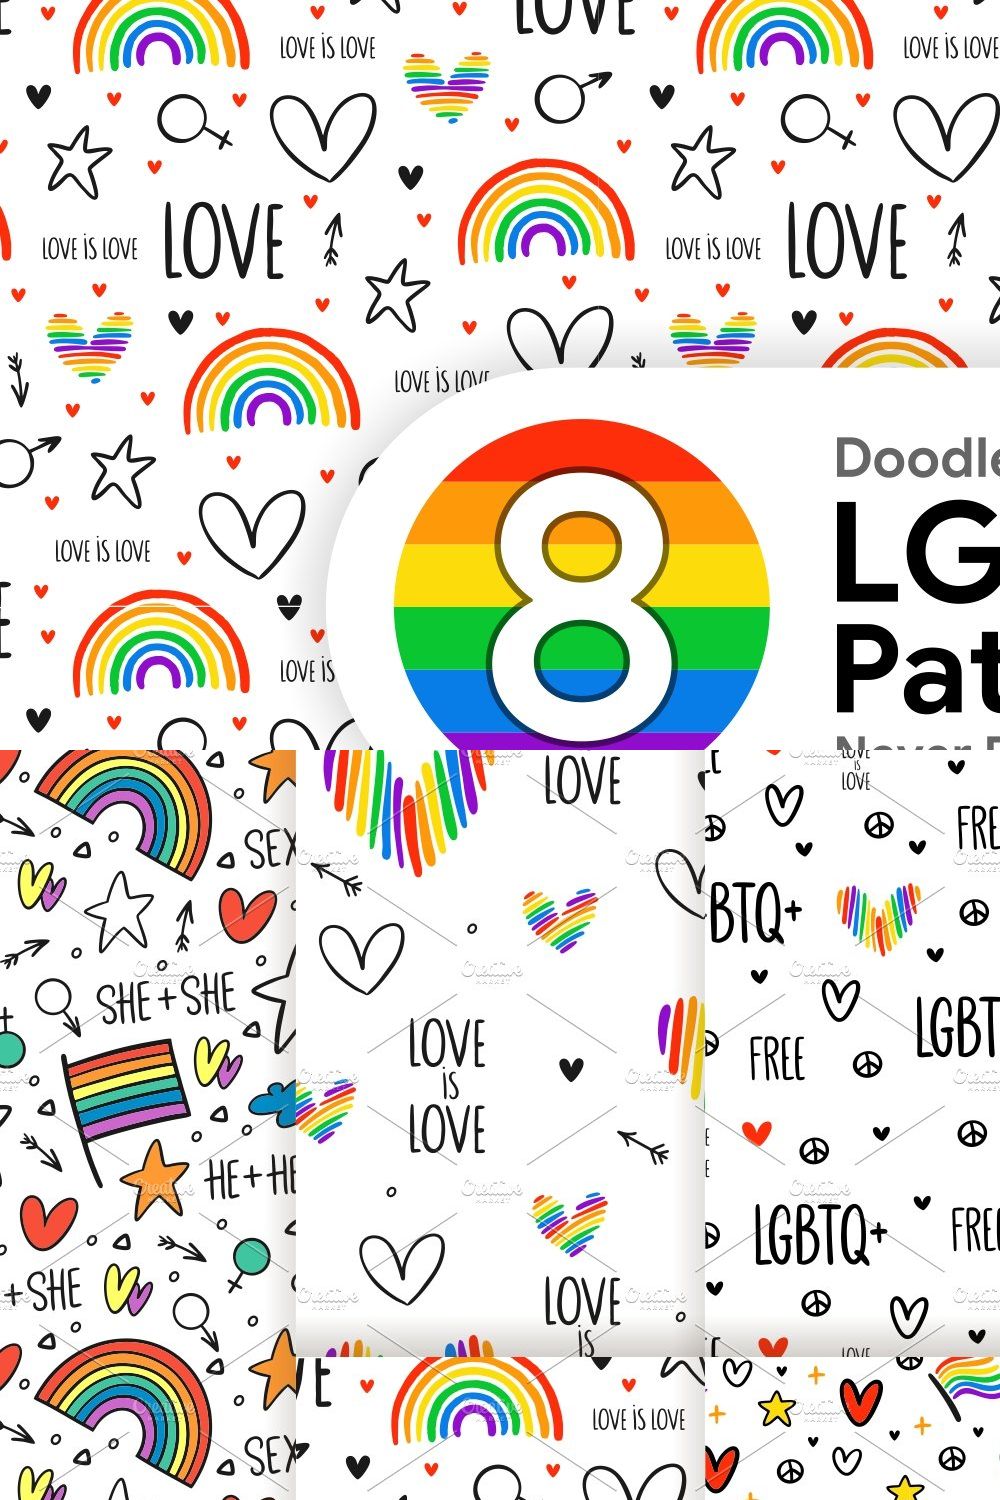 8 LGBTQ+ Never Ending Patterns pinterest preview image.